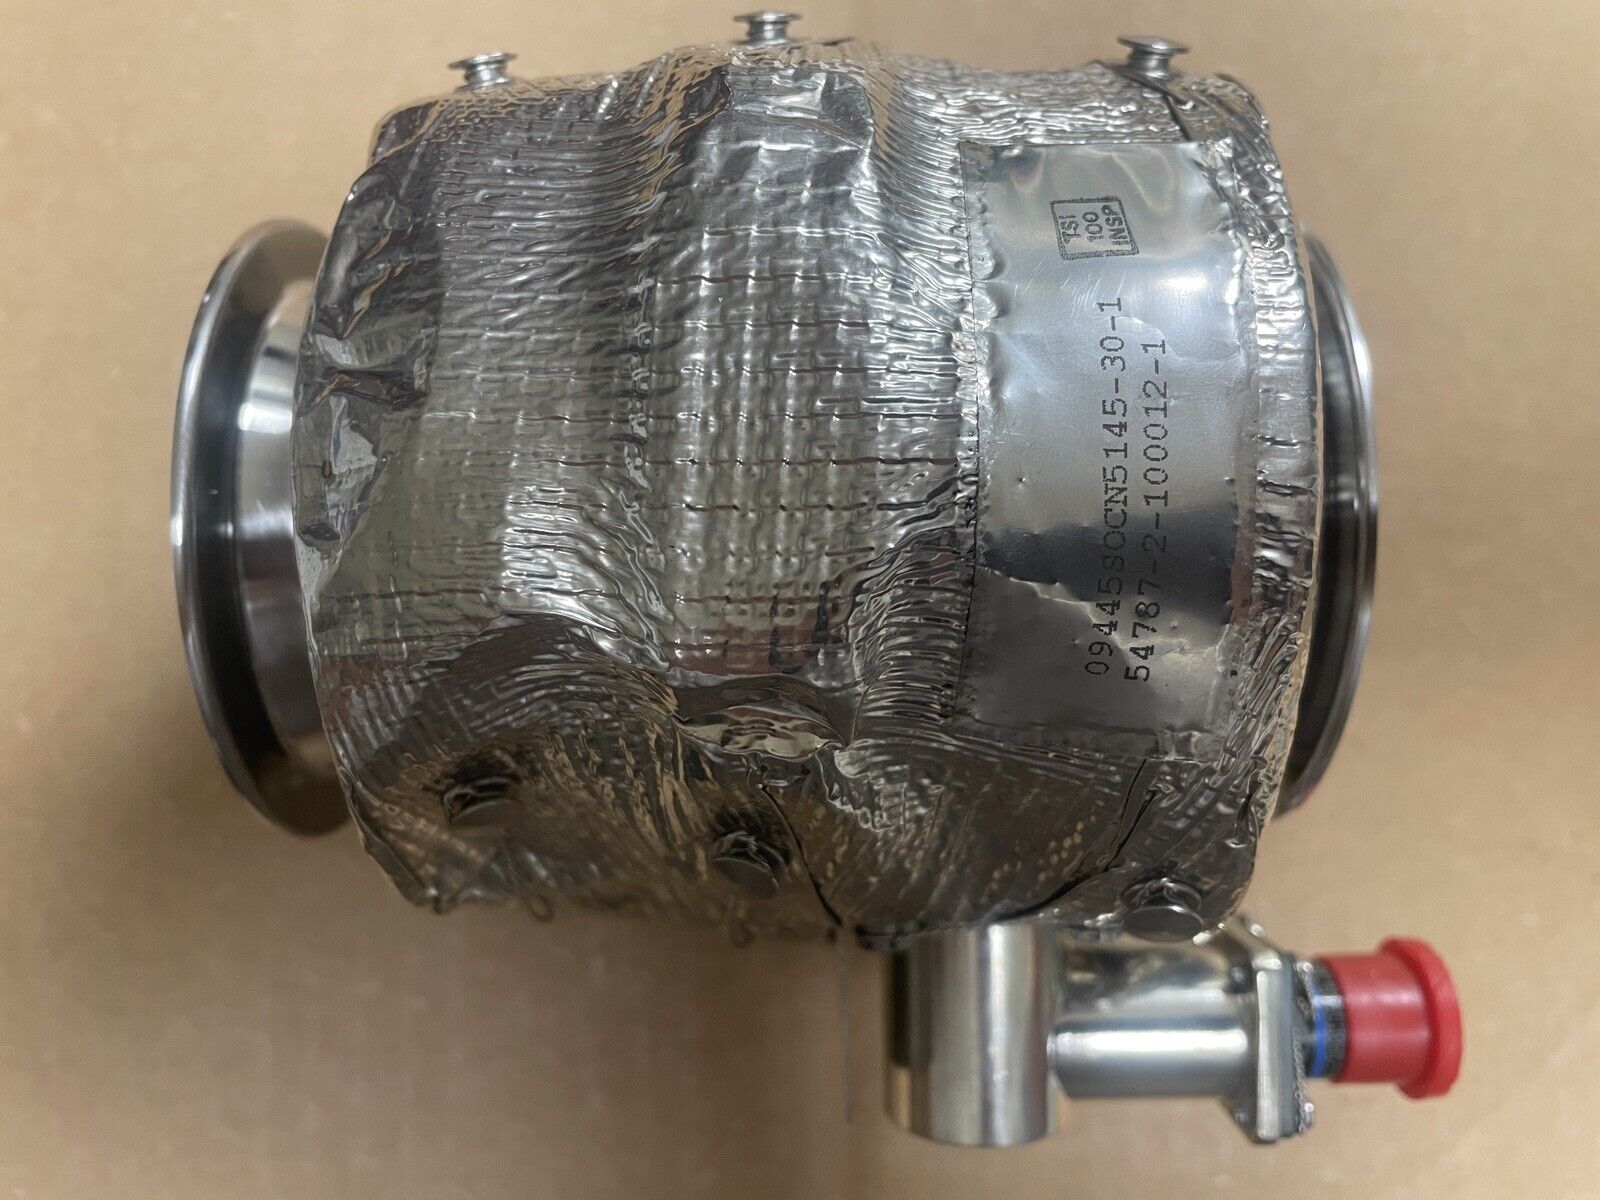 dukes valve anti-ice p/n 5145-30-1. No original box.